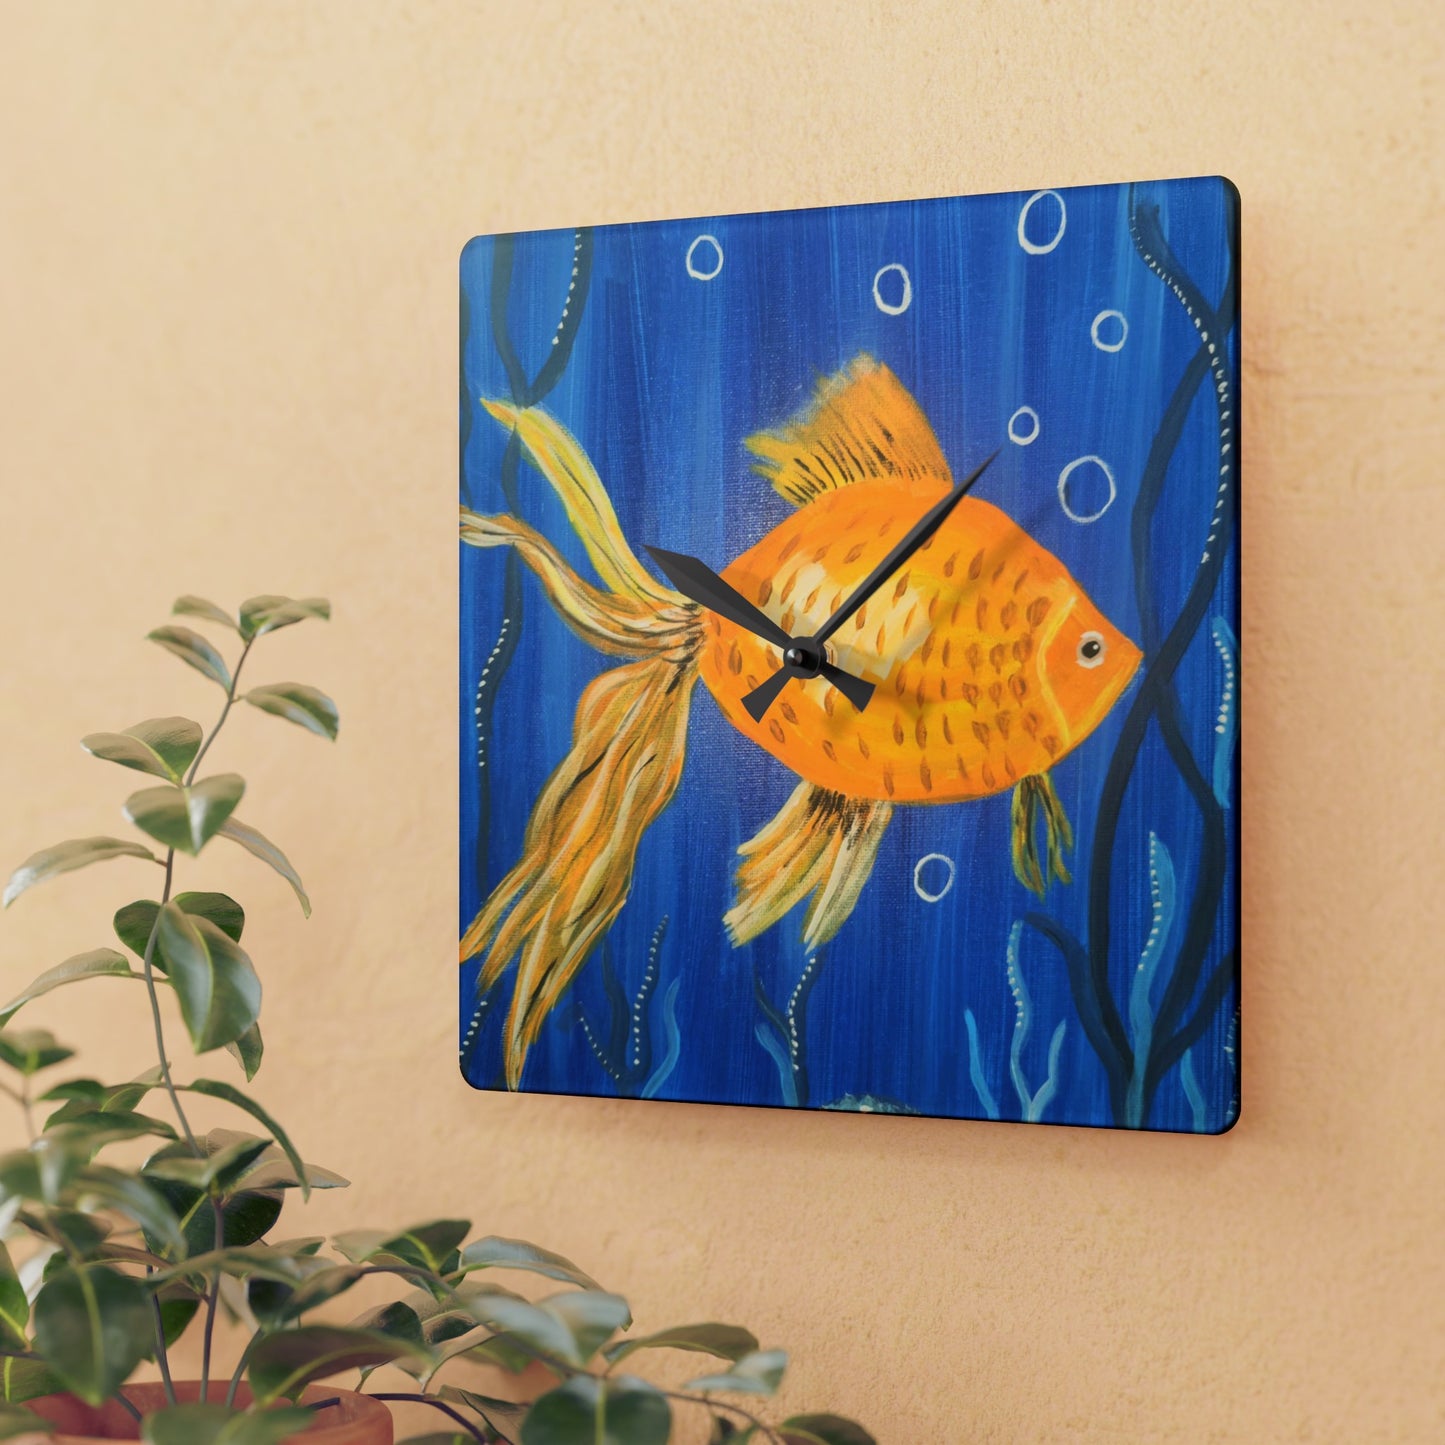 Goldfish Acrylic Wall Clock (Brookson Collection)